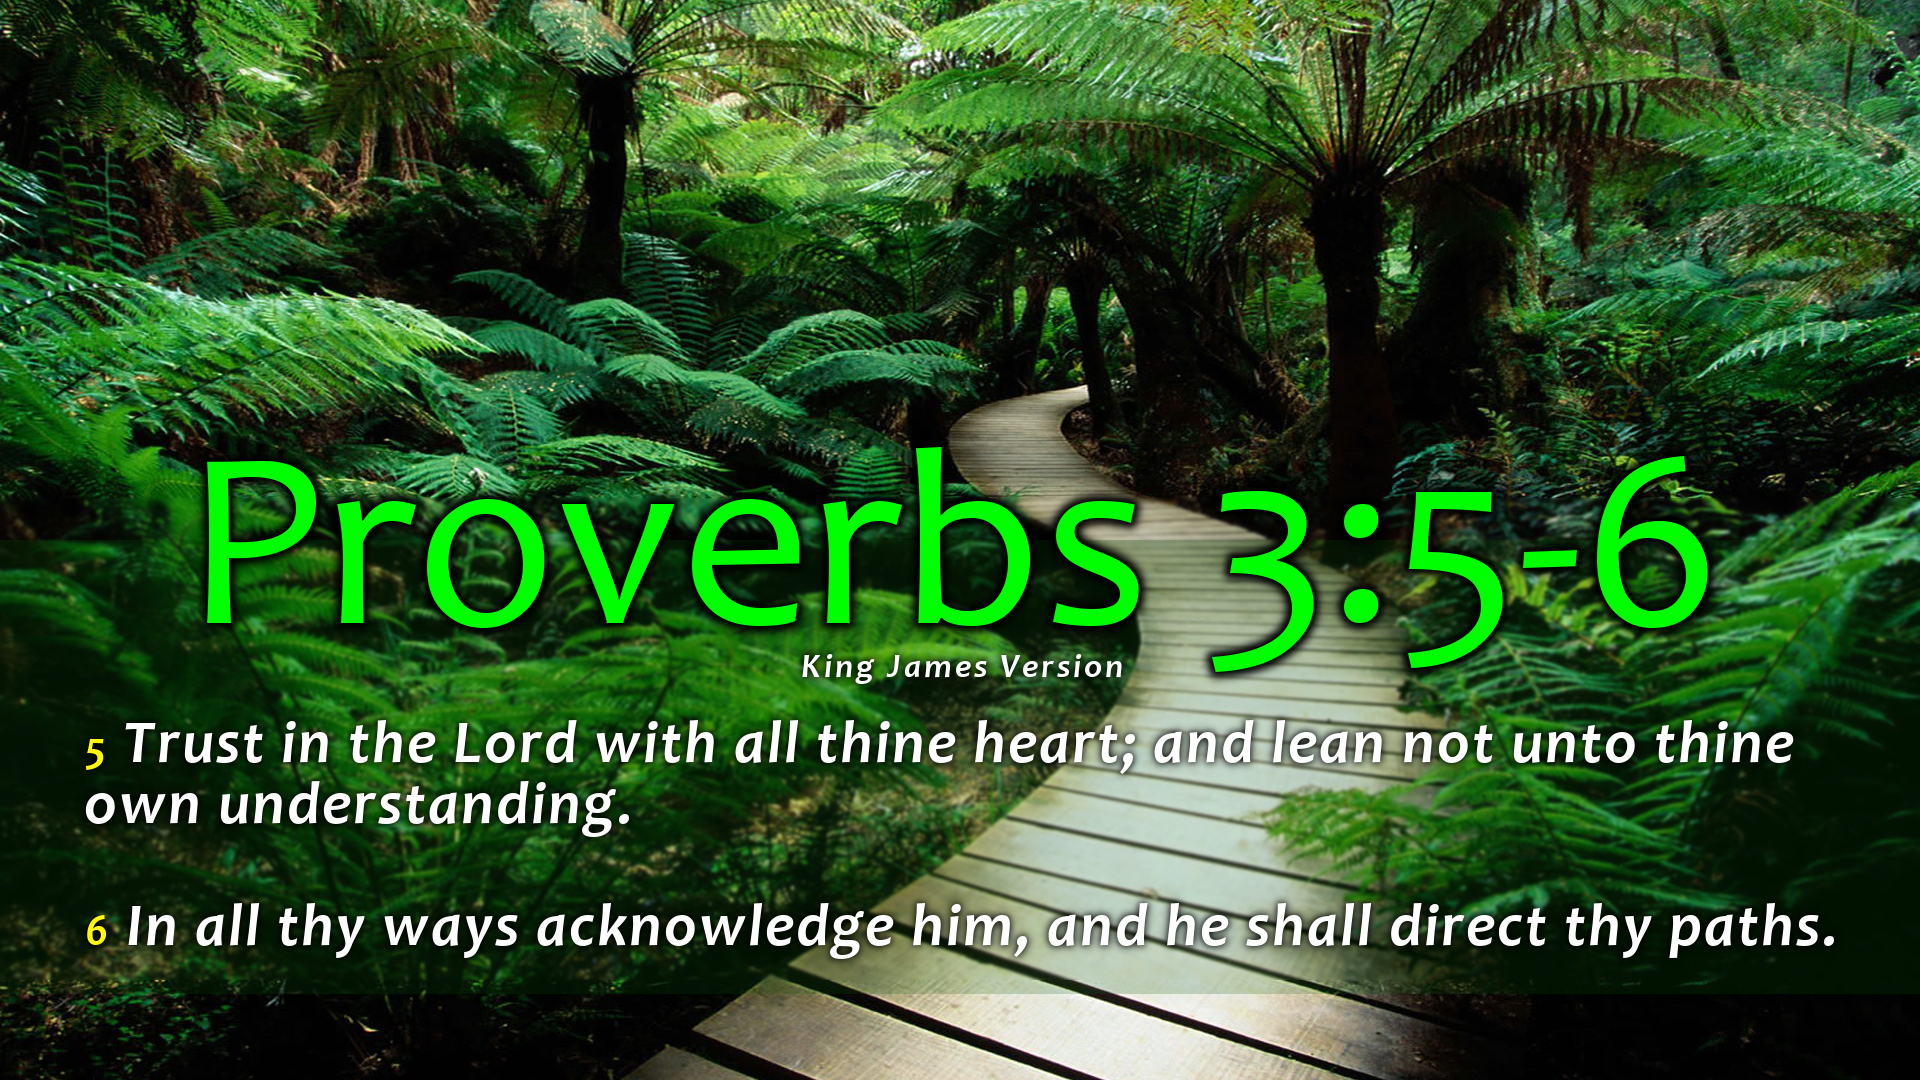 [48+] Proverbs 3 5 6 Wallpaper - WallpaperSafari